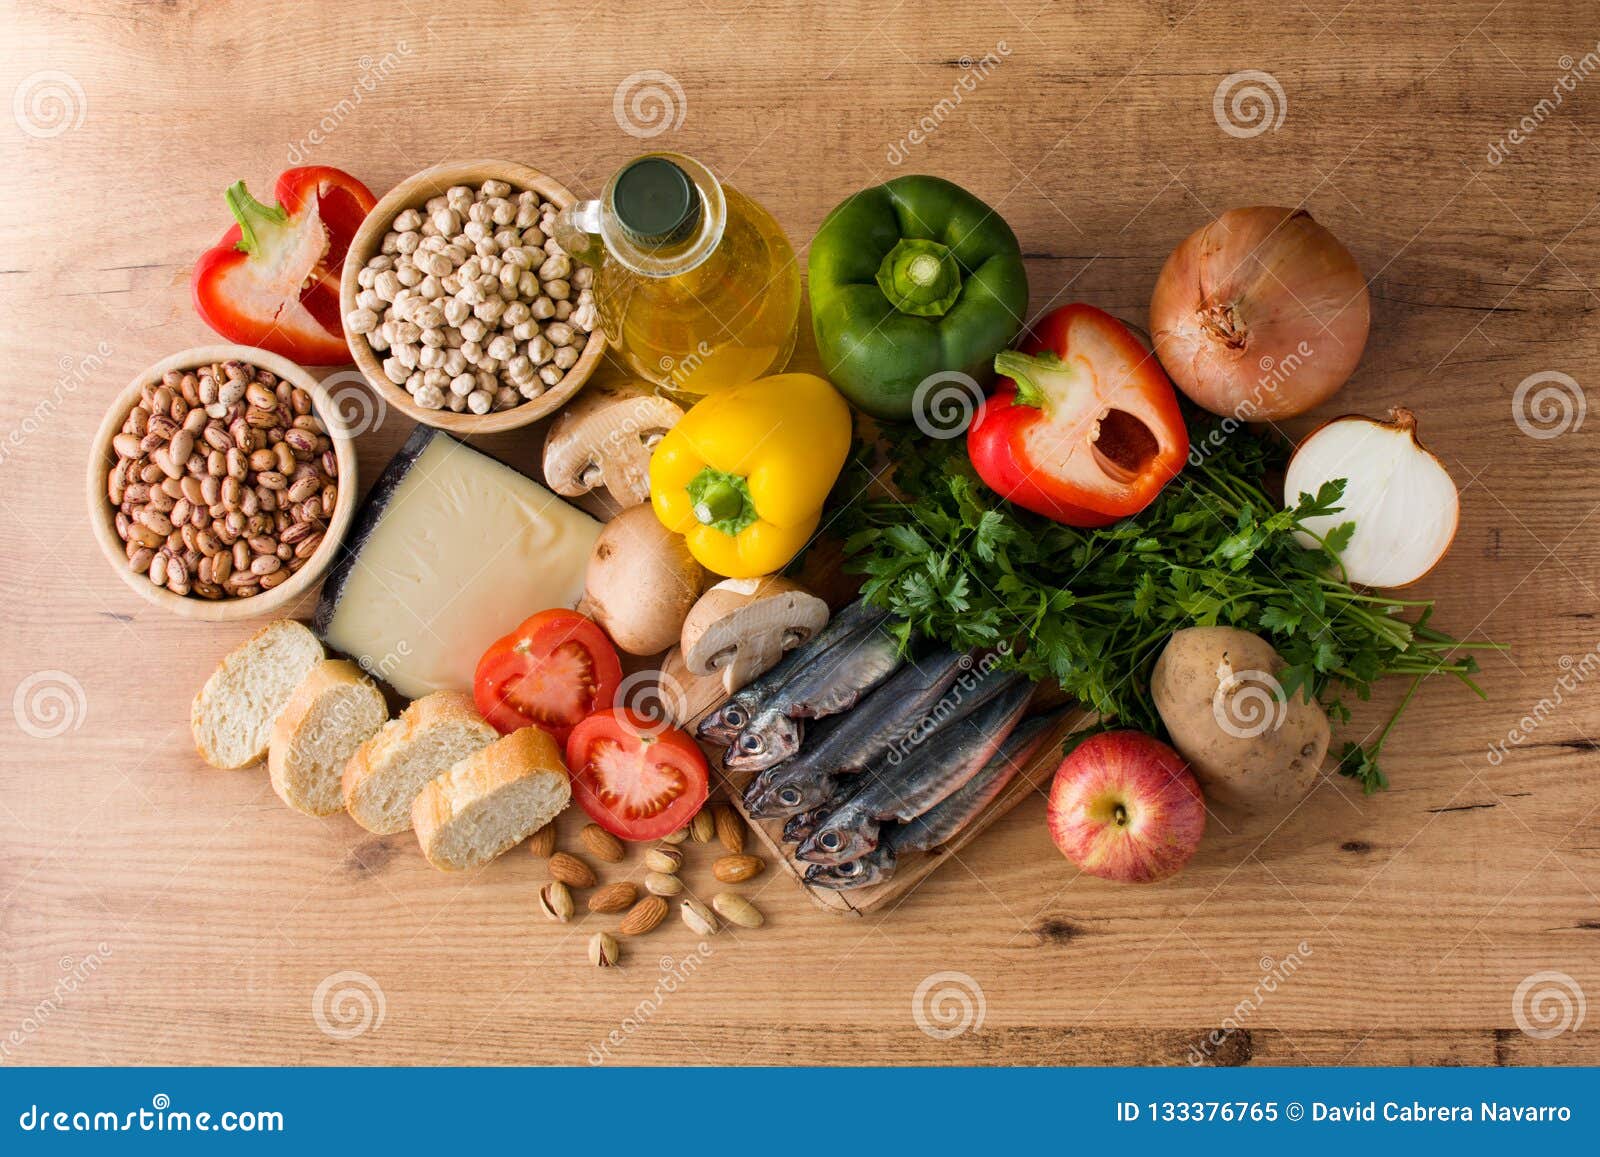 healthy eating. mediterranean diet. fruit,vegetables, grain, nuts olive oil and fish